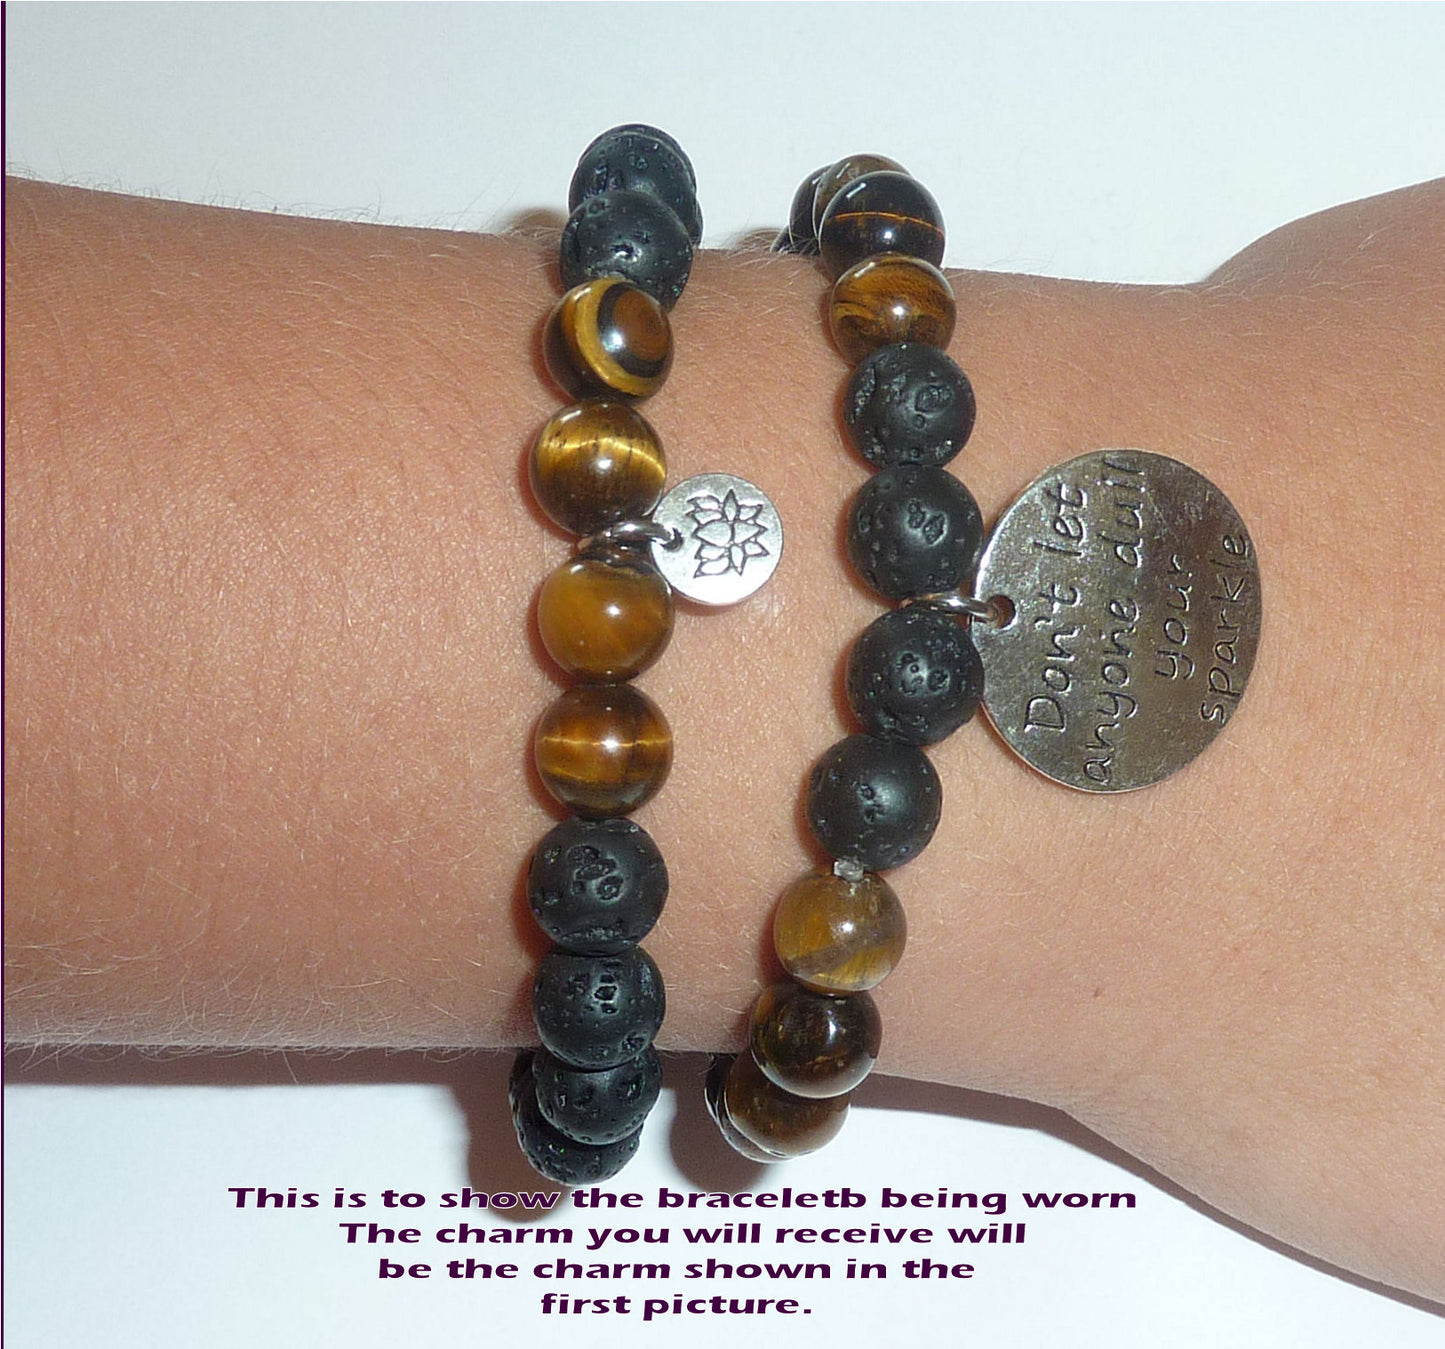 Love my Dog - Women's Tiger Eye & Black Lava Diffuser Yoga Beads Charm Stretch Bracelet Gift Set